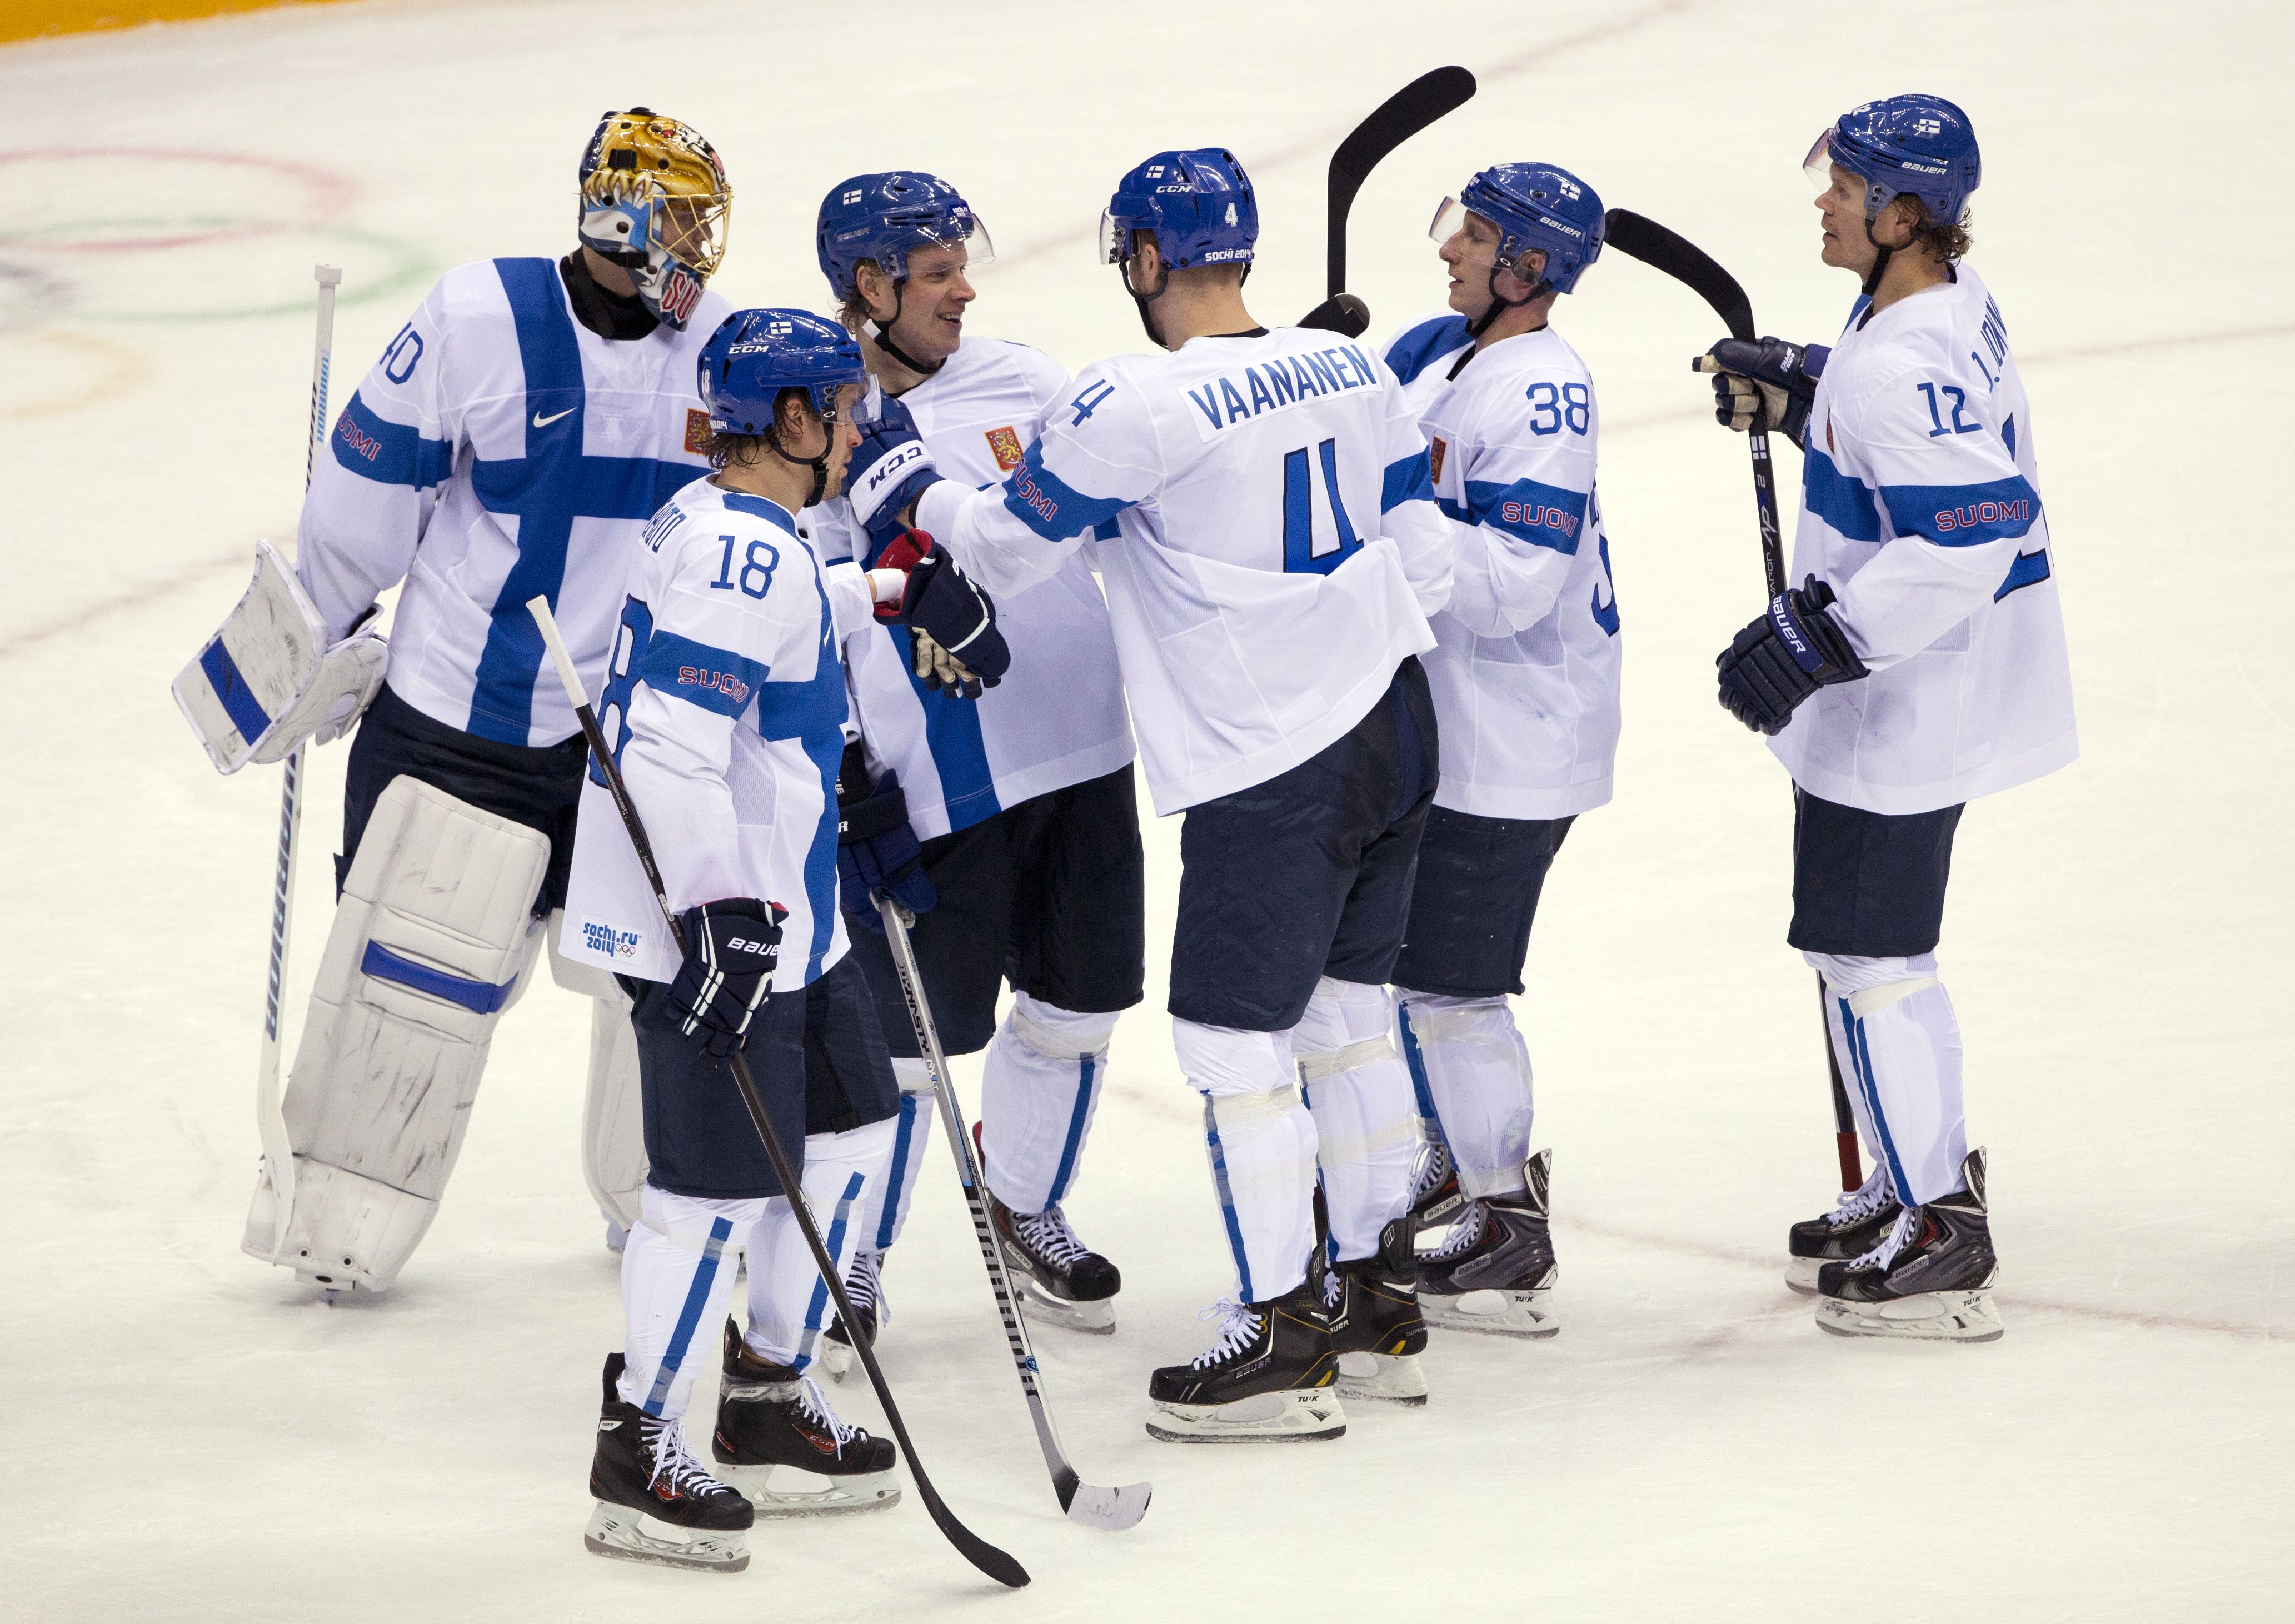 Men's Hockey - Finland vs Austria  - Sochi 2014